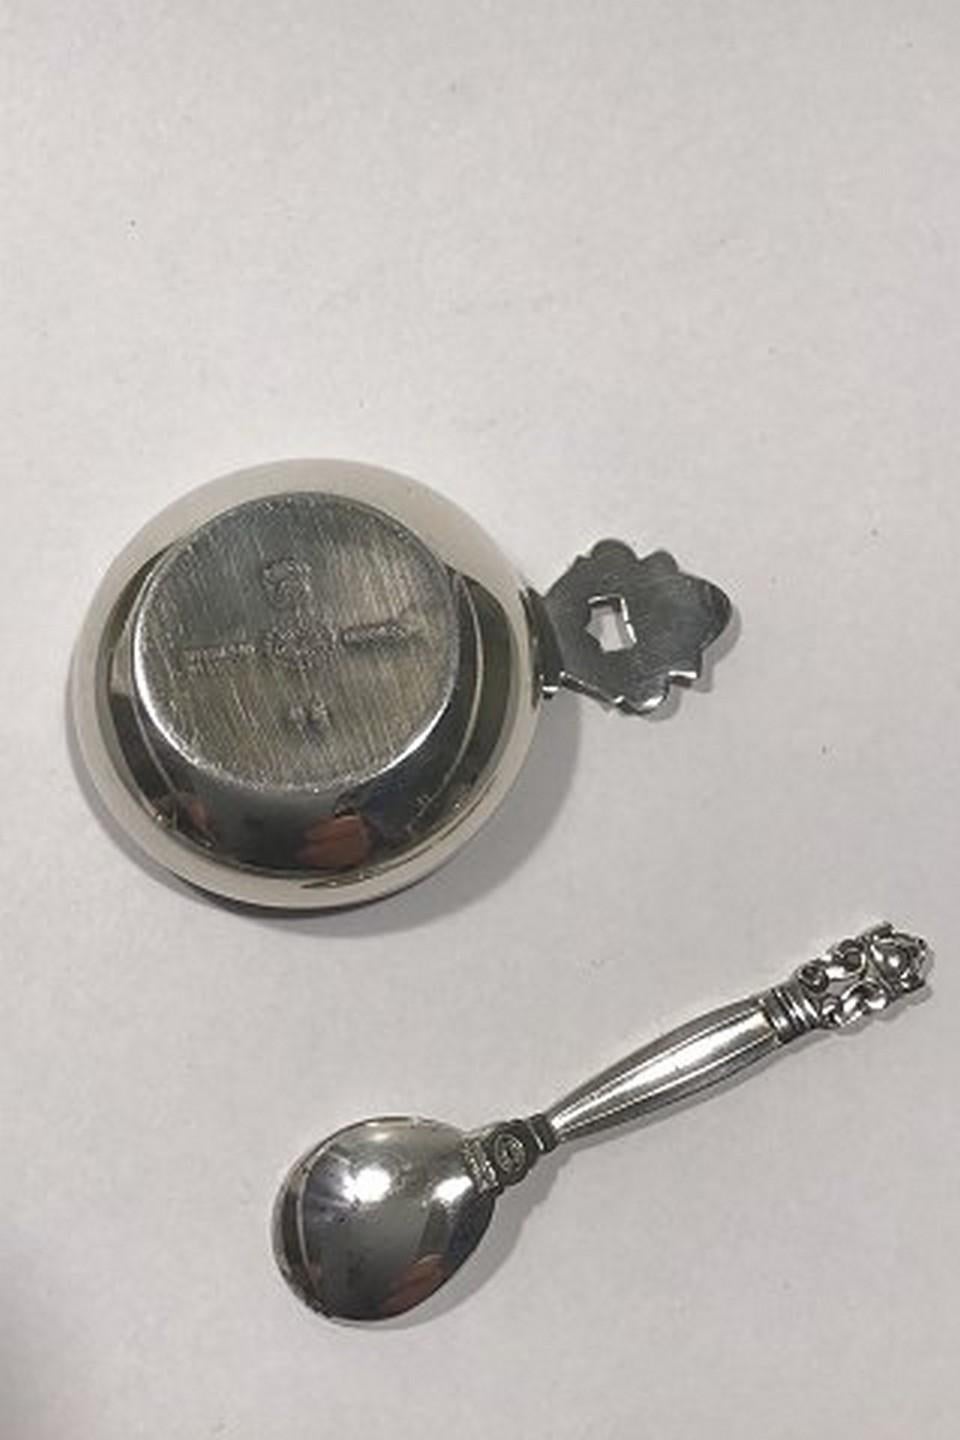 Georg Jensen sterling silver acorn saltcellar No 62 (Green enamel) and salt spoon measures: 4.1 cm (1 39/64 in), spoon 6 cm (2 23/64 in)
Item no.: 431137.
 